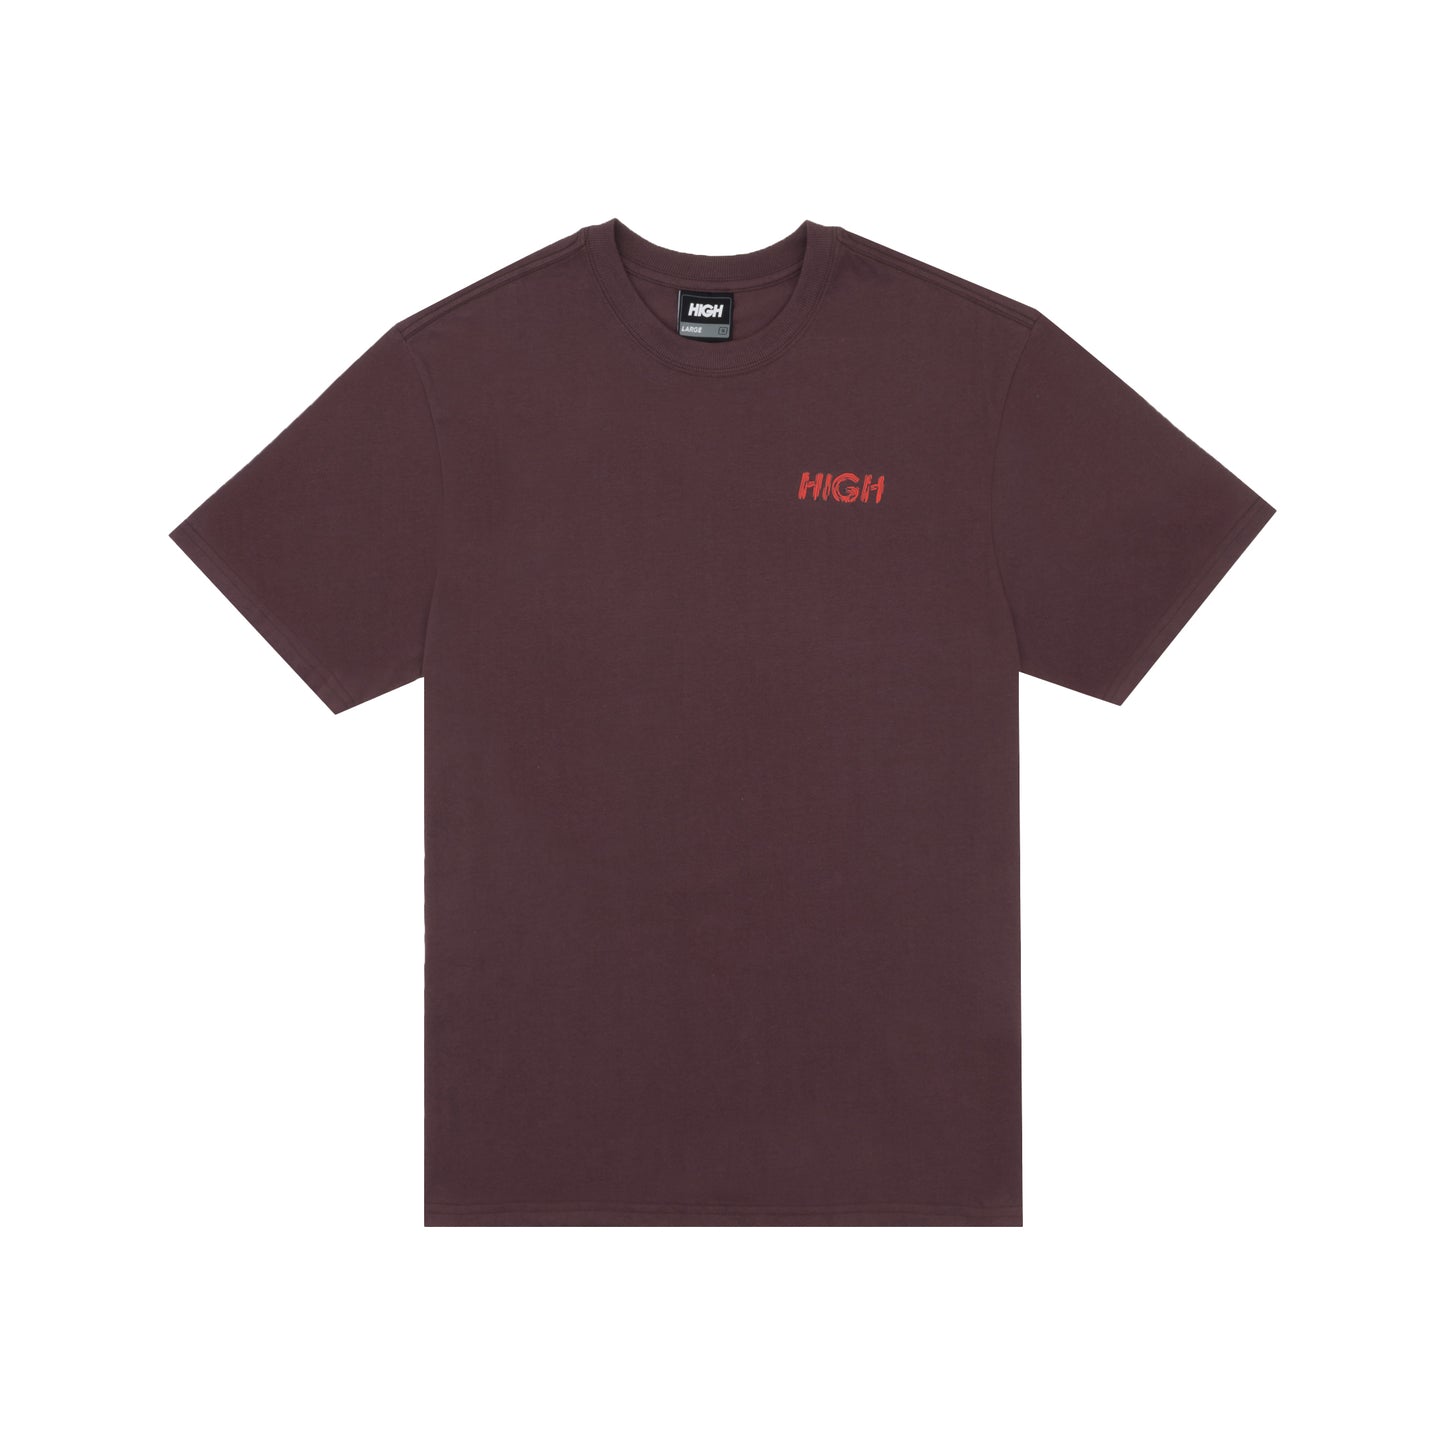 HIGH - Camiseta Arriba Brown